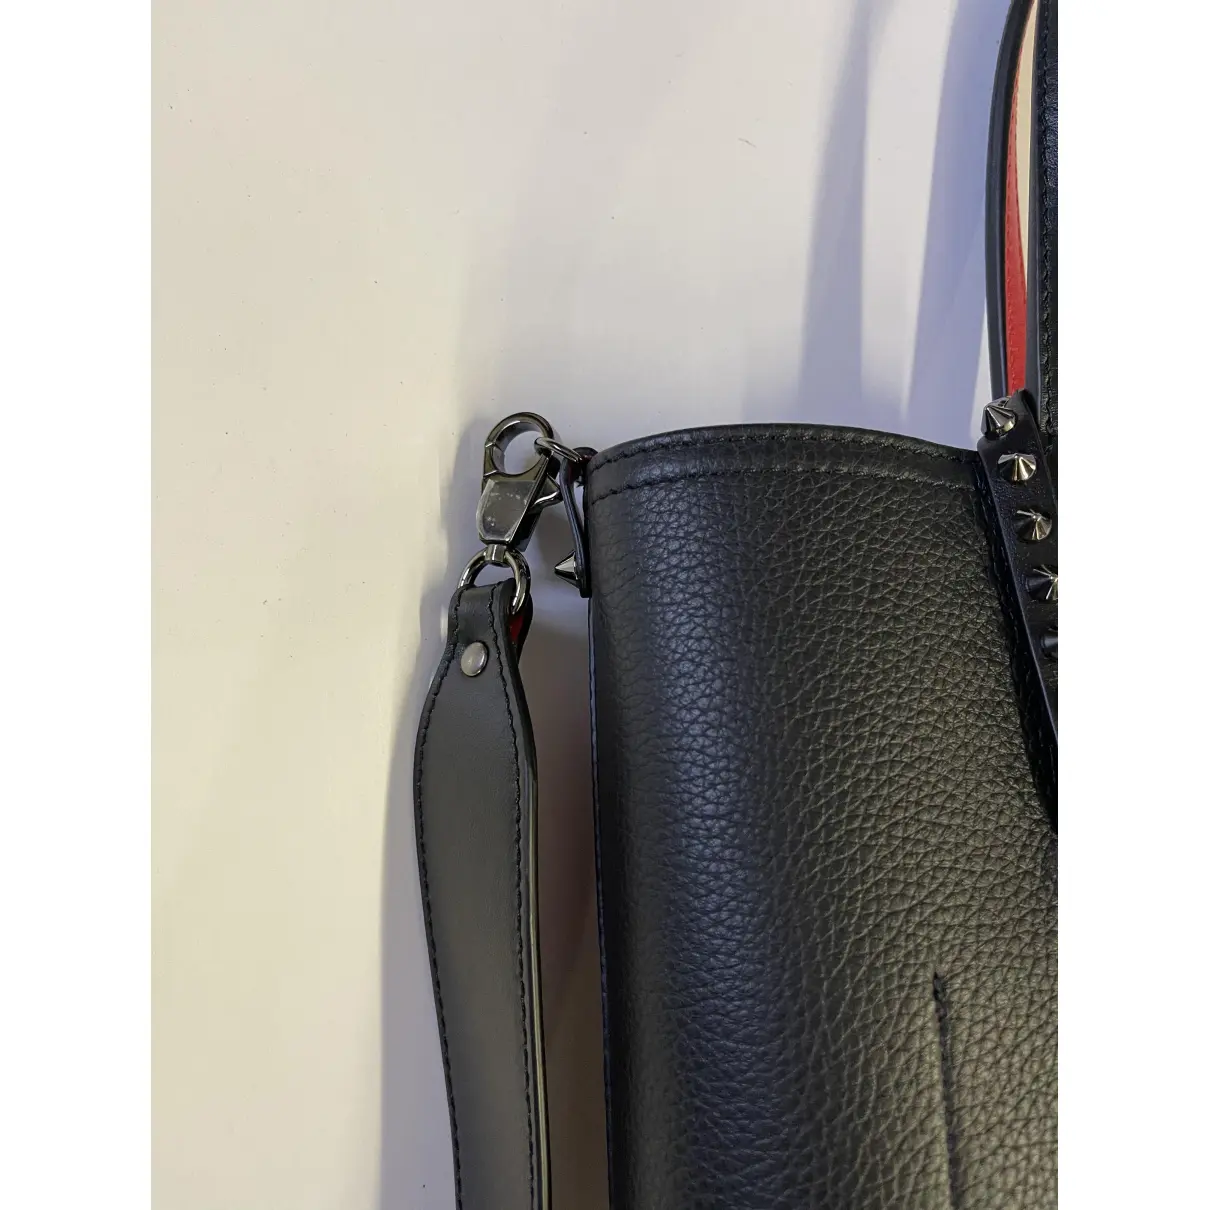 Cabata leather handbag Christian Louboutin